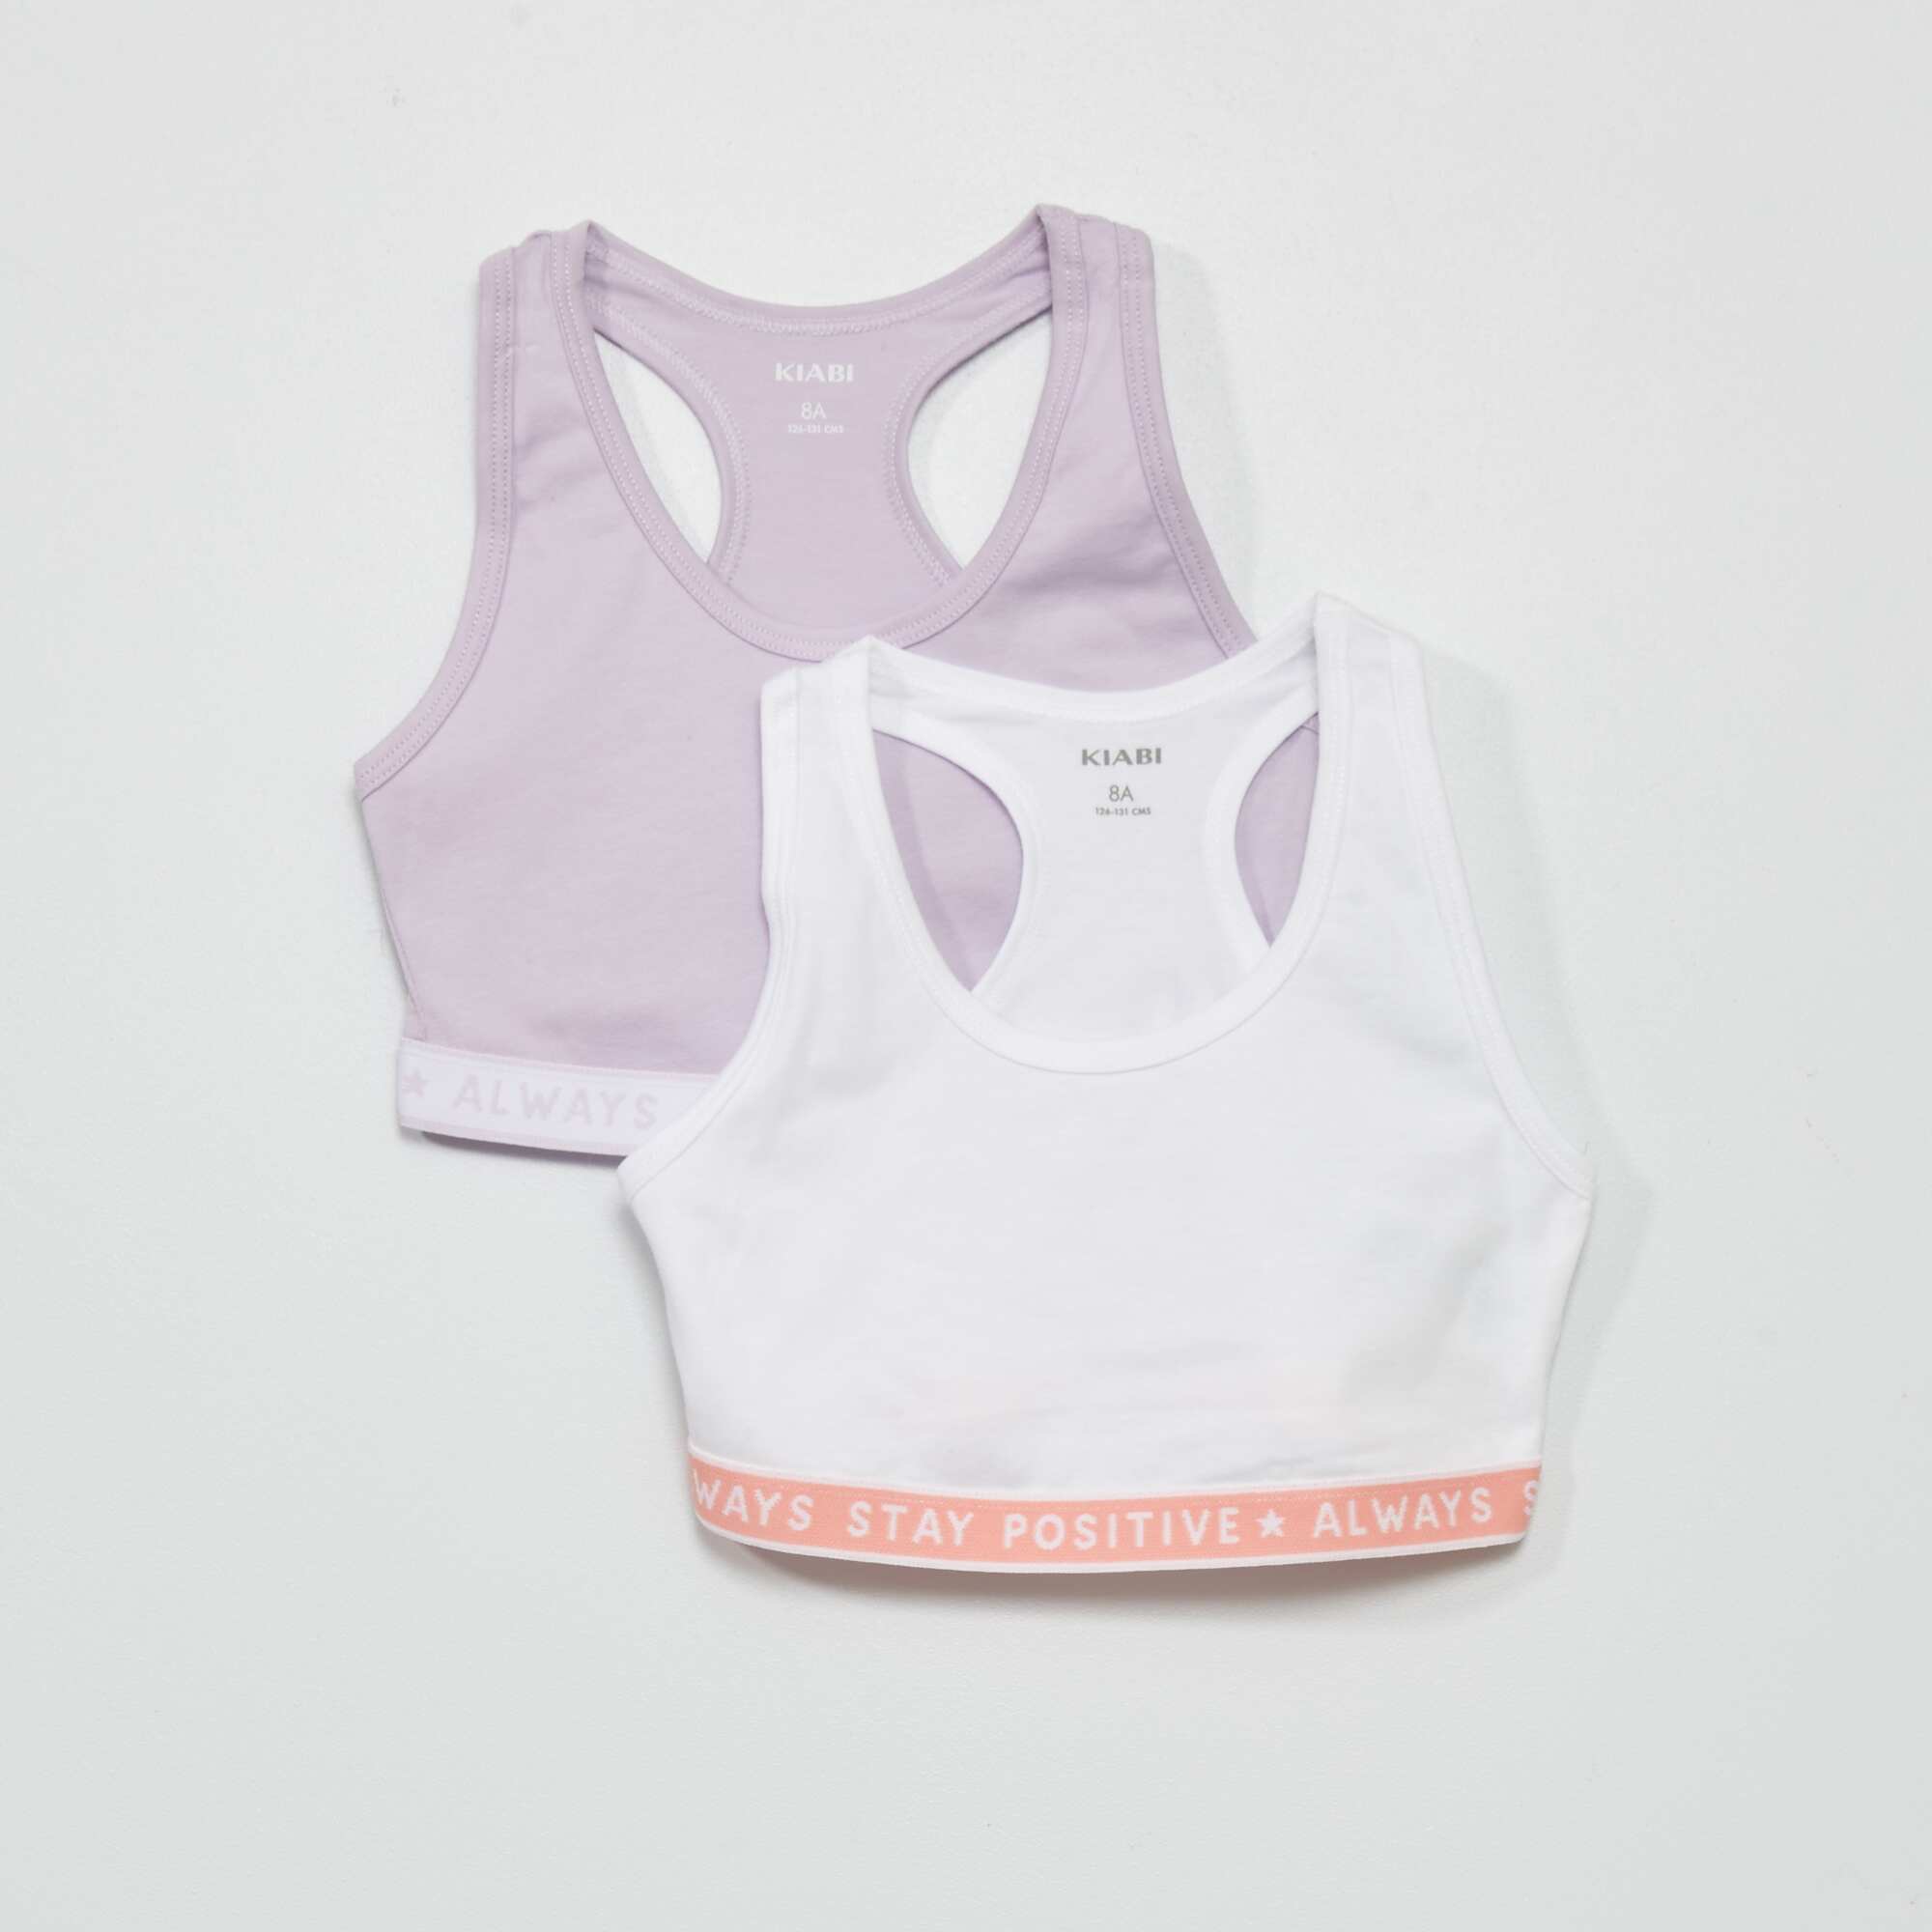 Pack of 2 sports bras WHITE – Kiabi Arabie